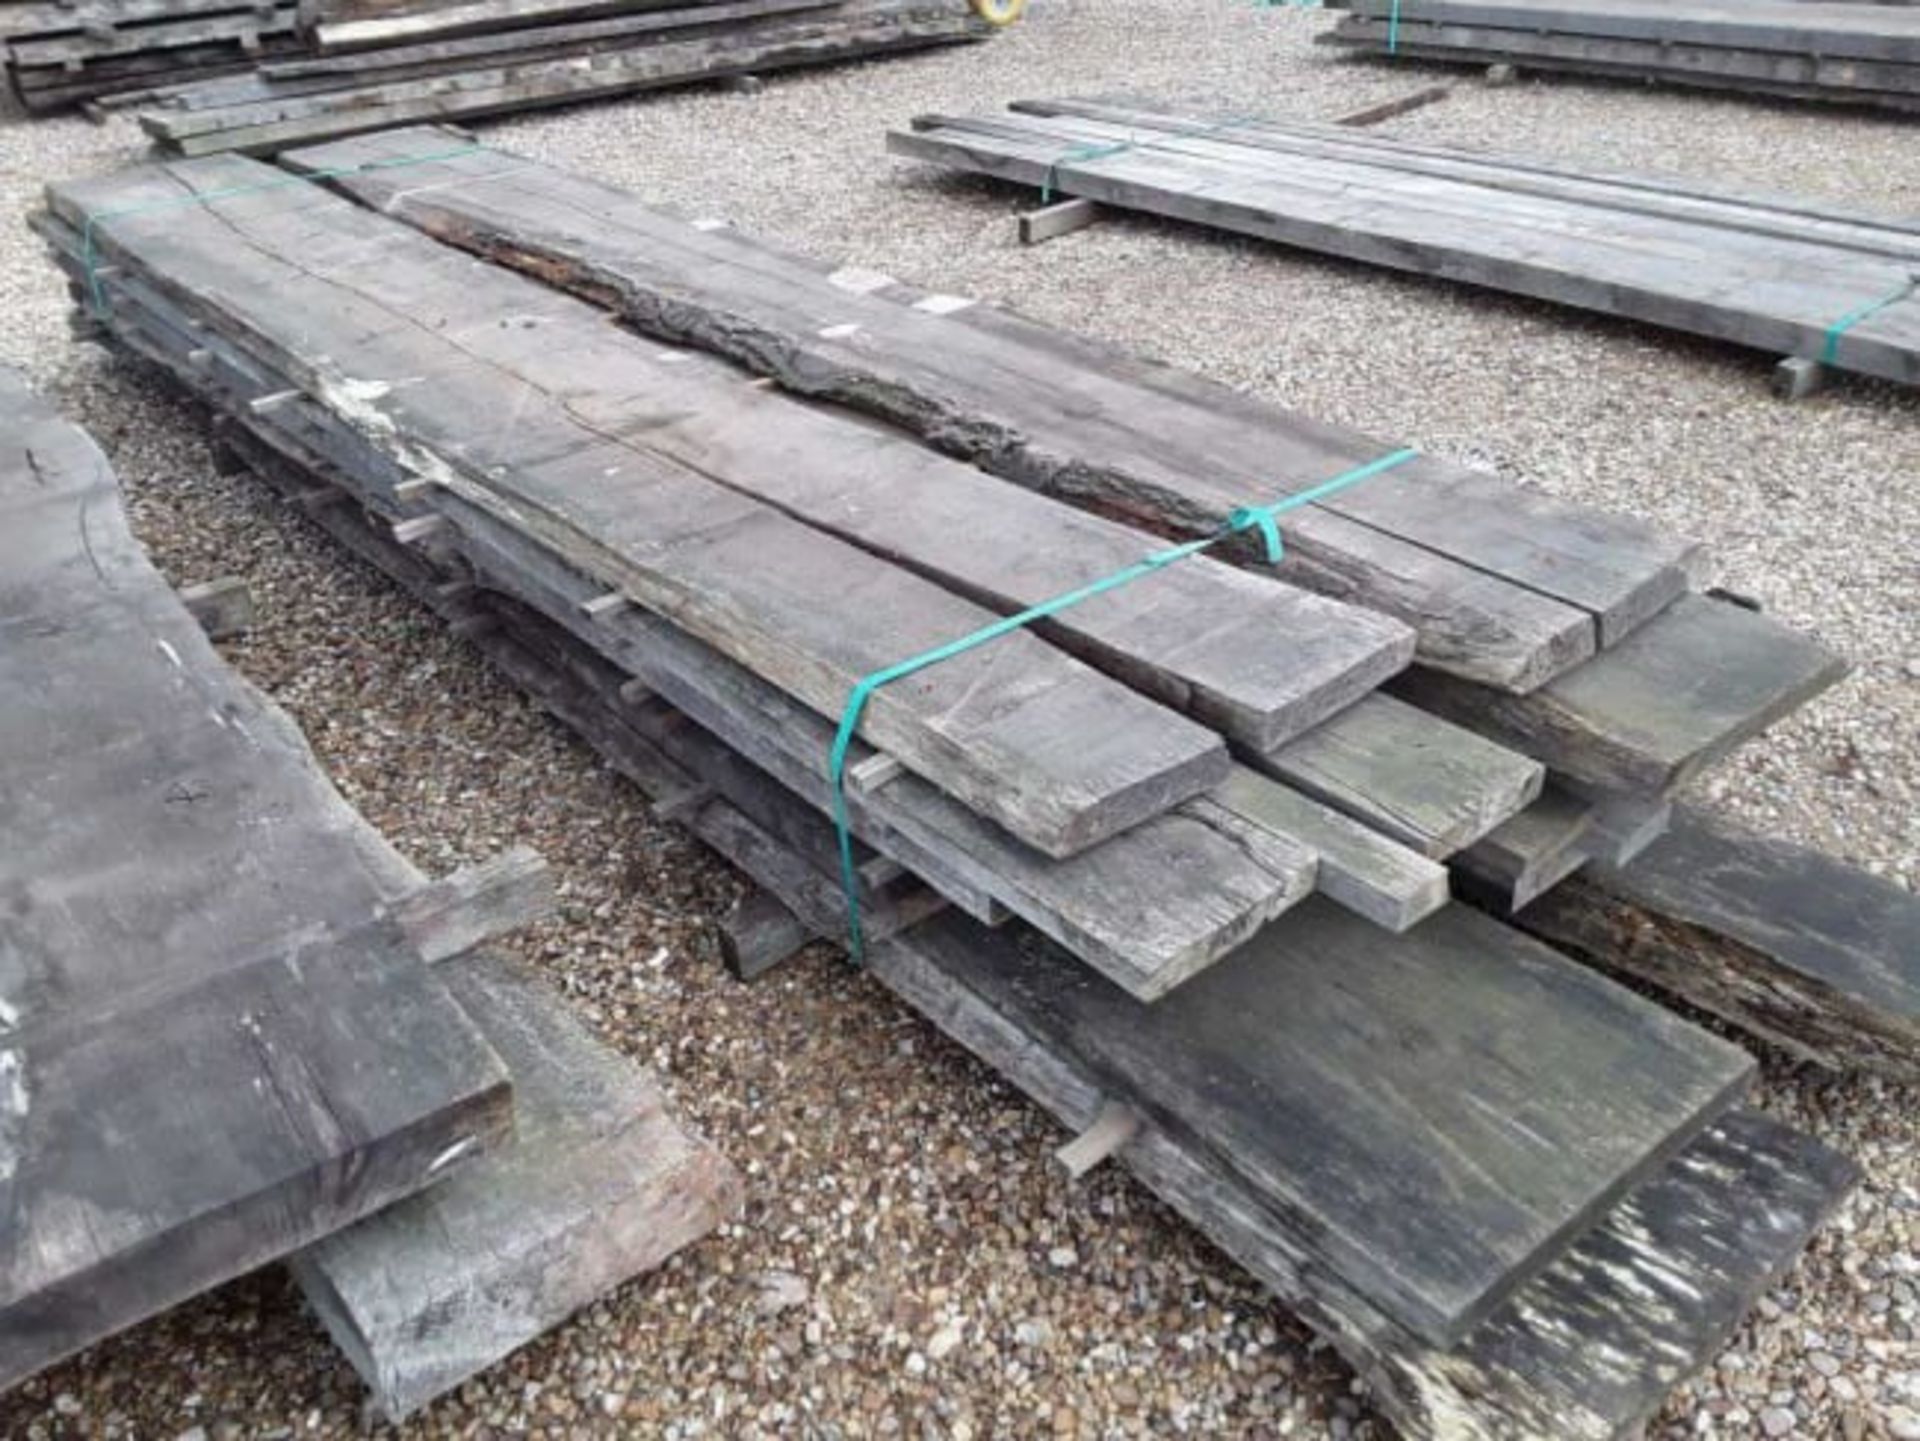 18 x Hardwood Timber Air Dried Waney Edge / Live Edge English Oak Slabs / Boards - Image 4 of 4